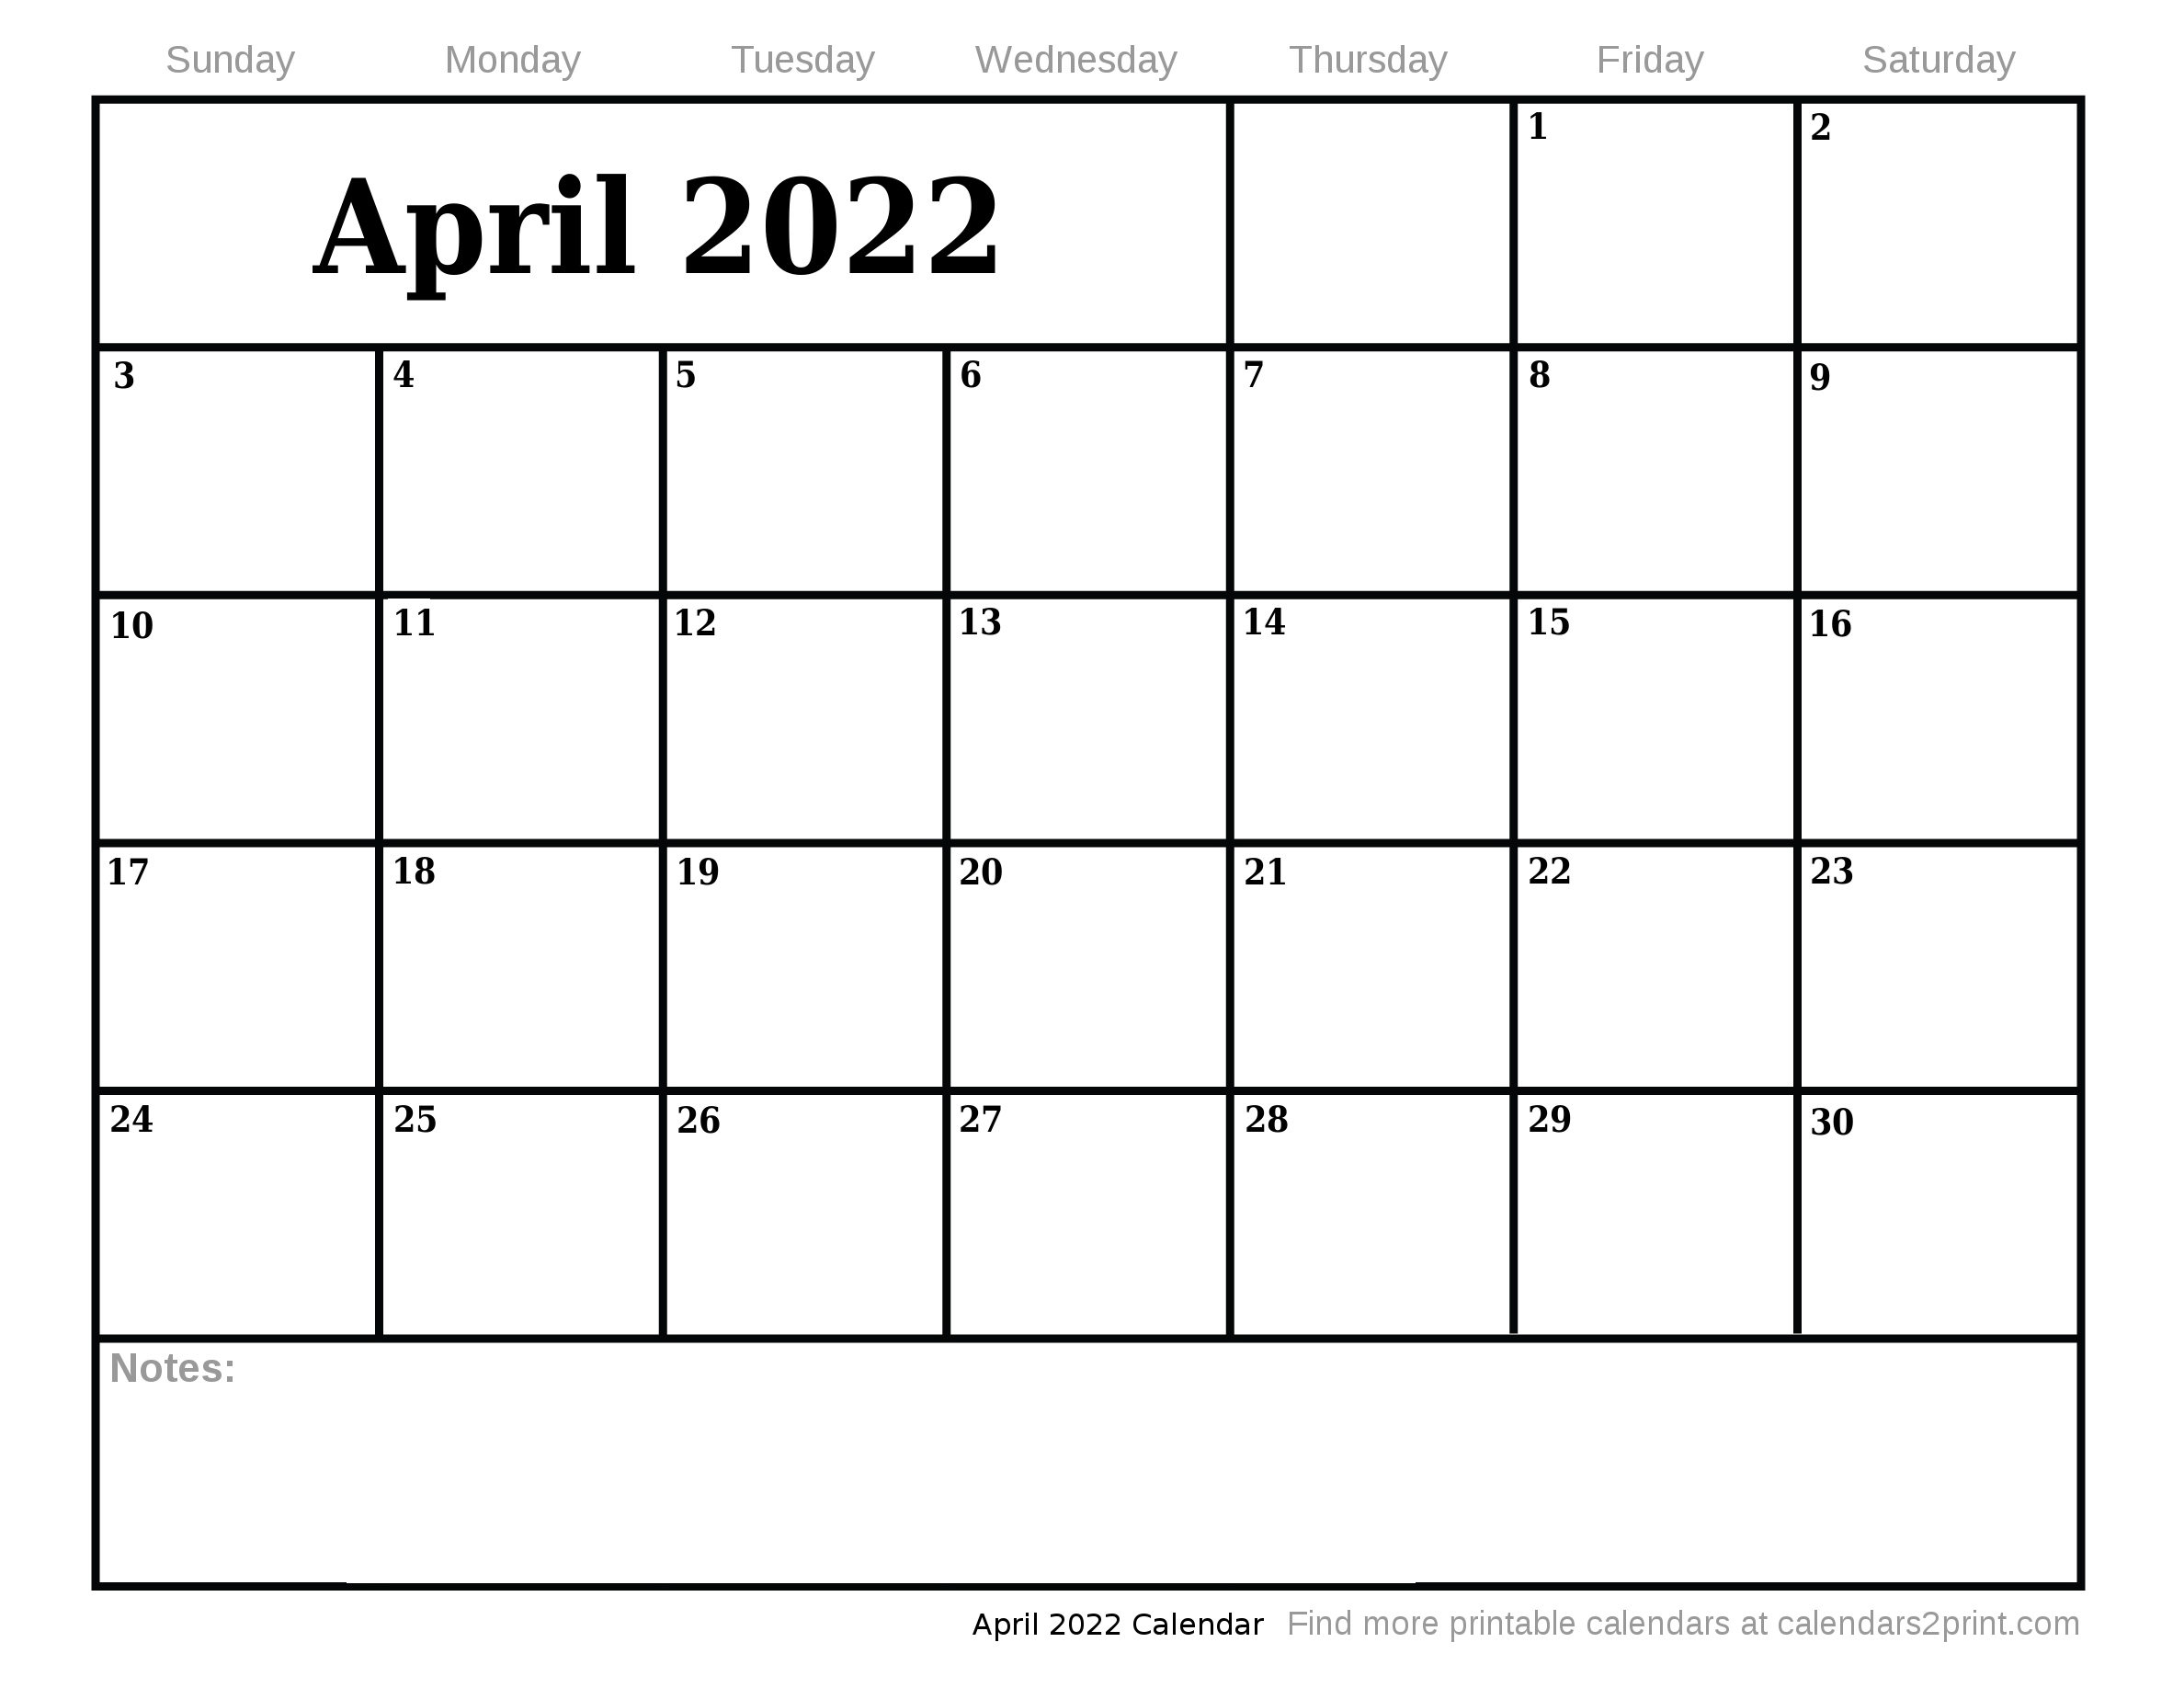 Apr 2022 Printable Calendar